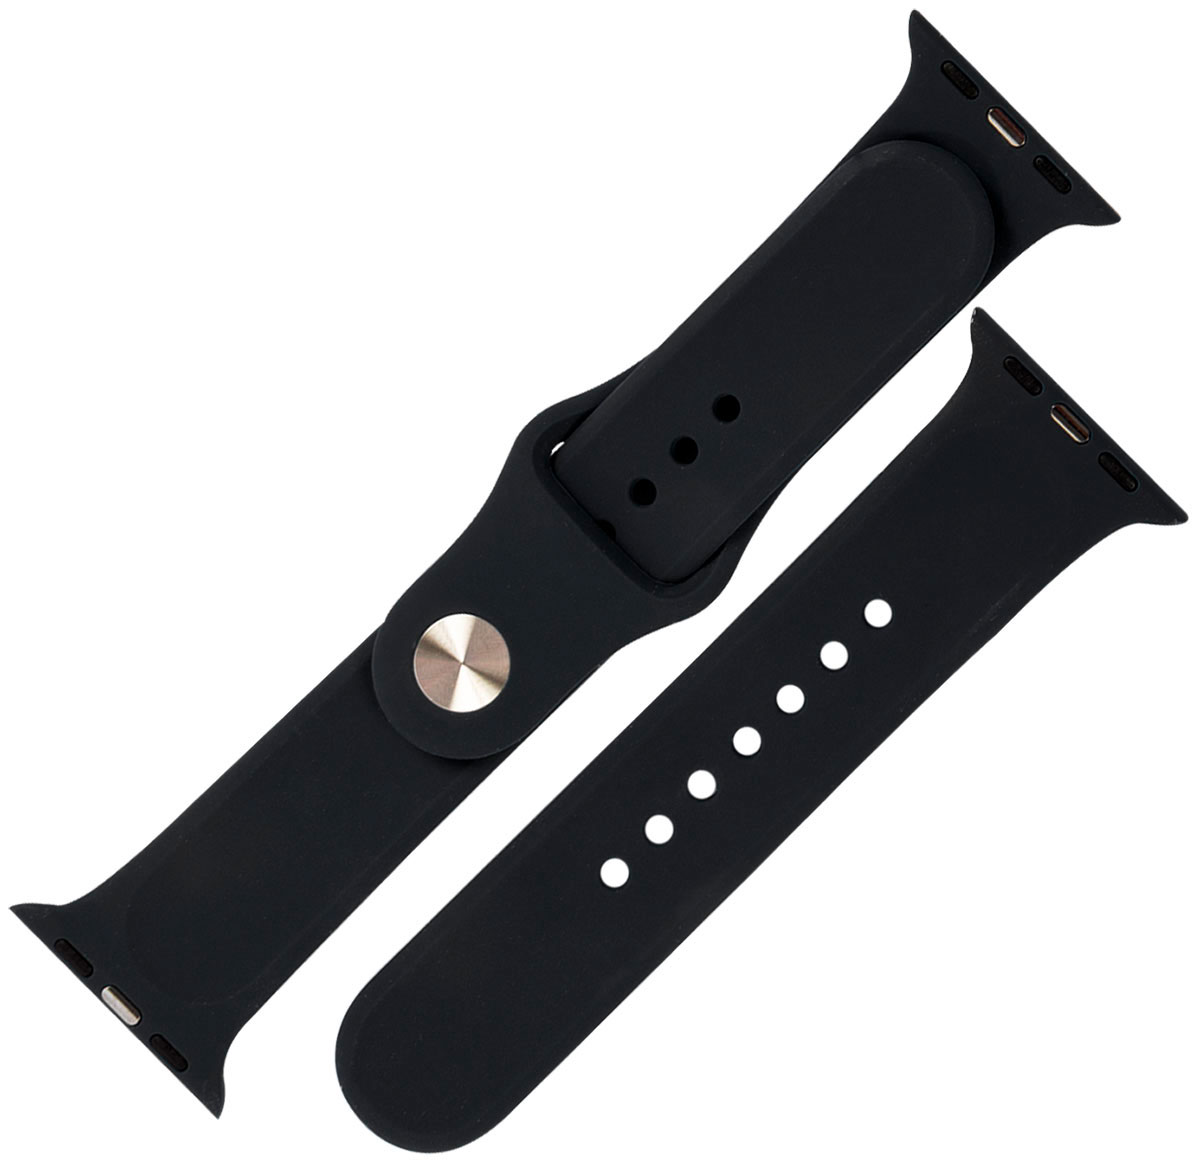 Ремешок силиконовый mObility для Apple watch - 38-40 мм (S3/S4/S5 SE/S6), черный litchi pattern leather case for samsung galaxy s3 s4 s5 s6 s7 edge s8 s9 s10 plus s10 lite s3 s3 s5 mini note 8 wallet flip case